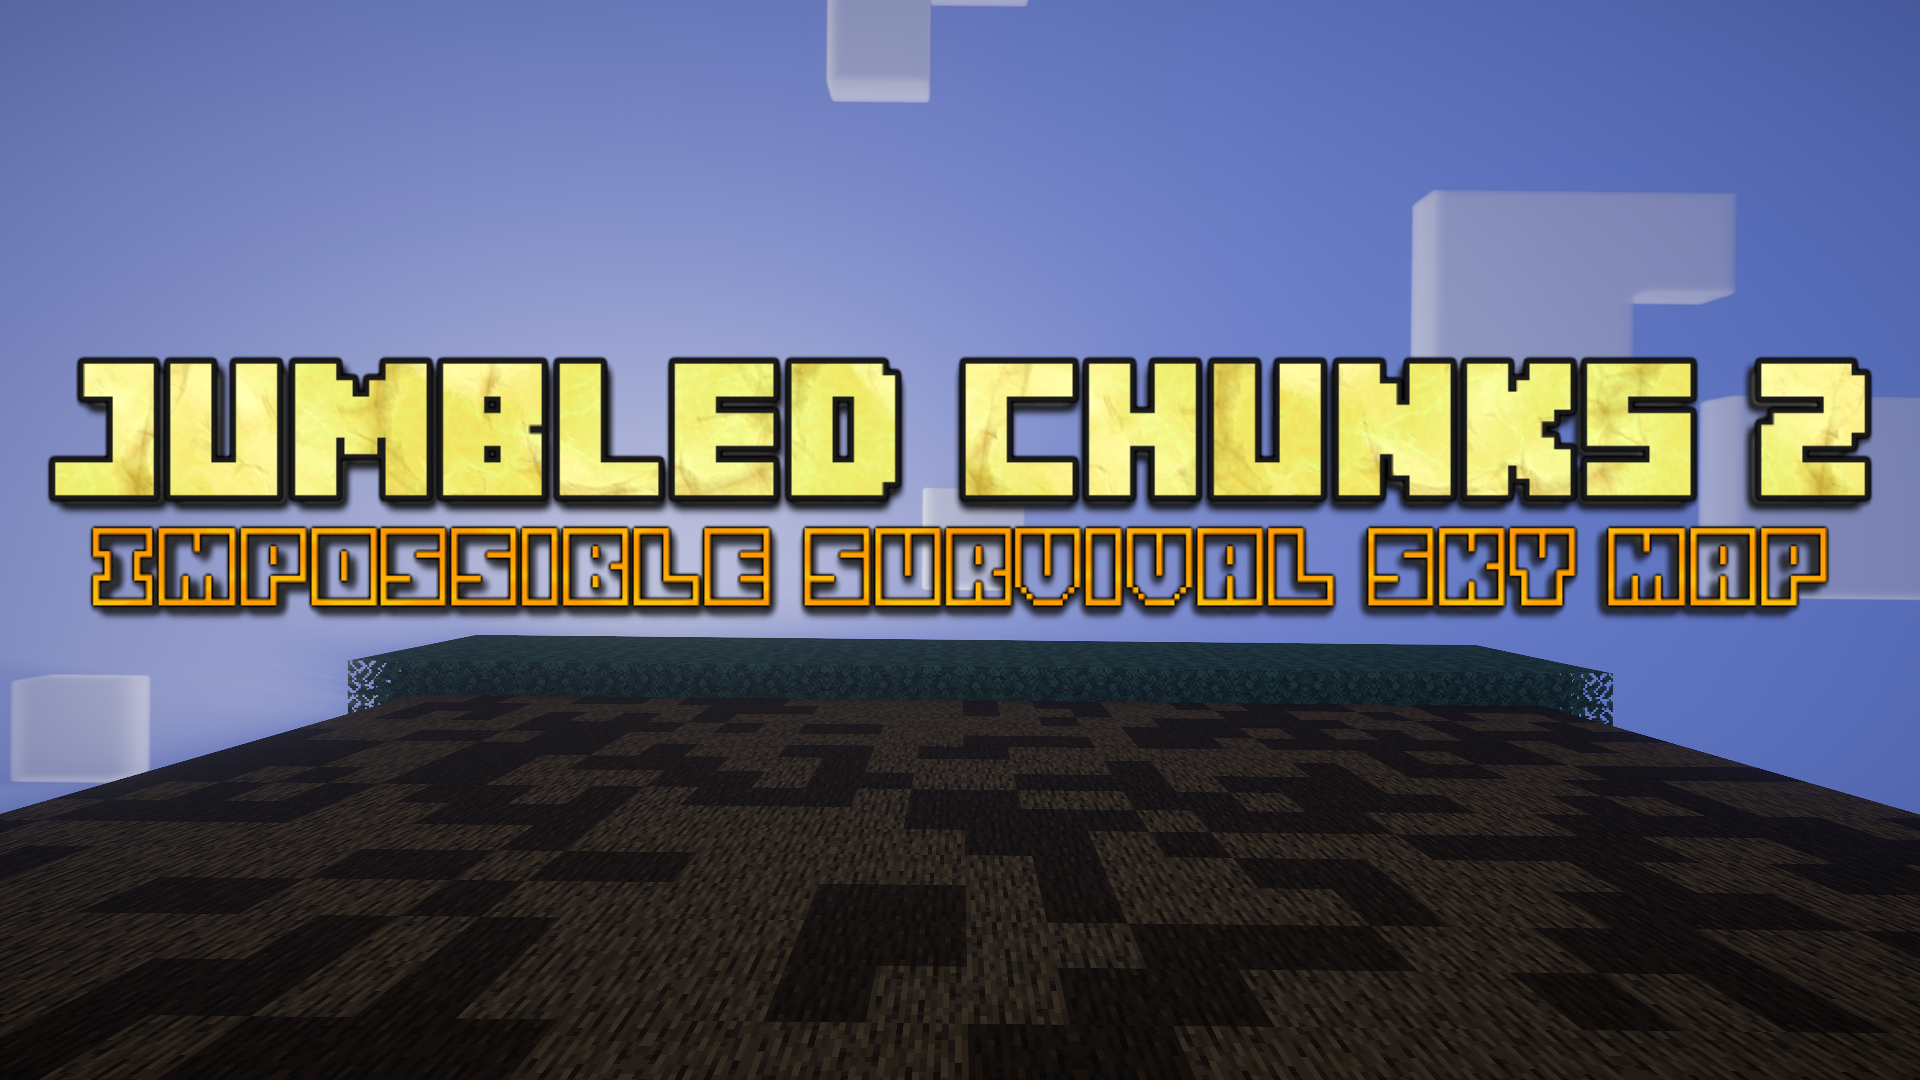 Télécharger JUMBLED CHUNKS 2 1.0 pour Minecraft 1.20.1